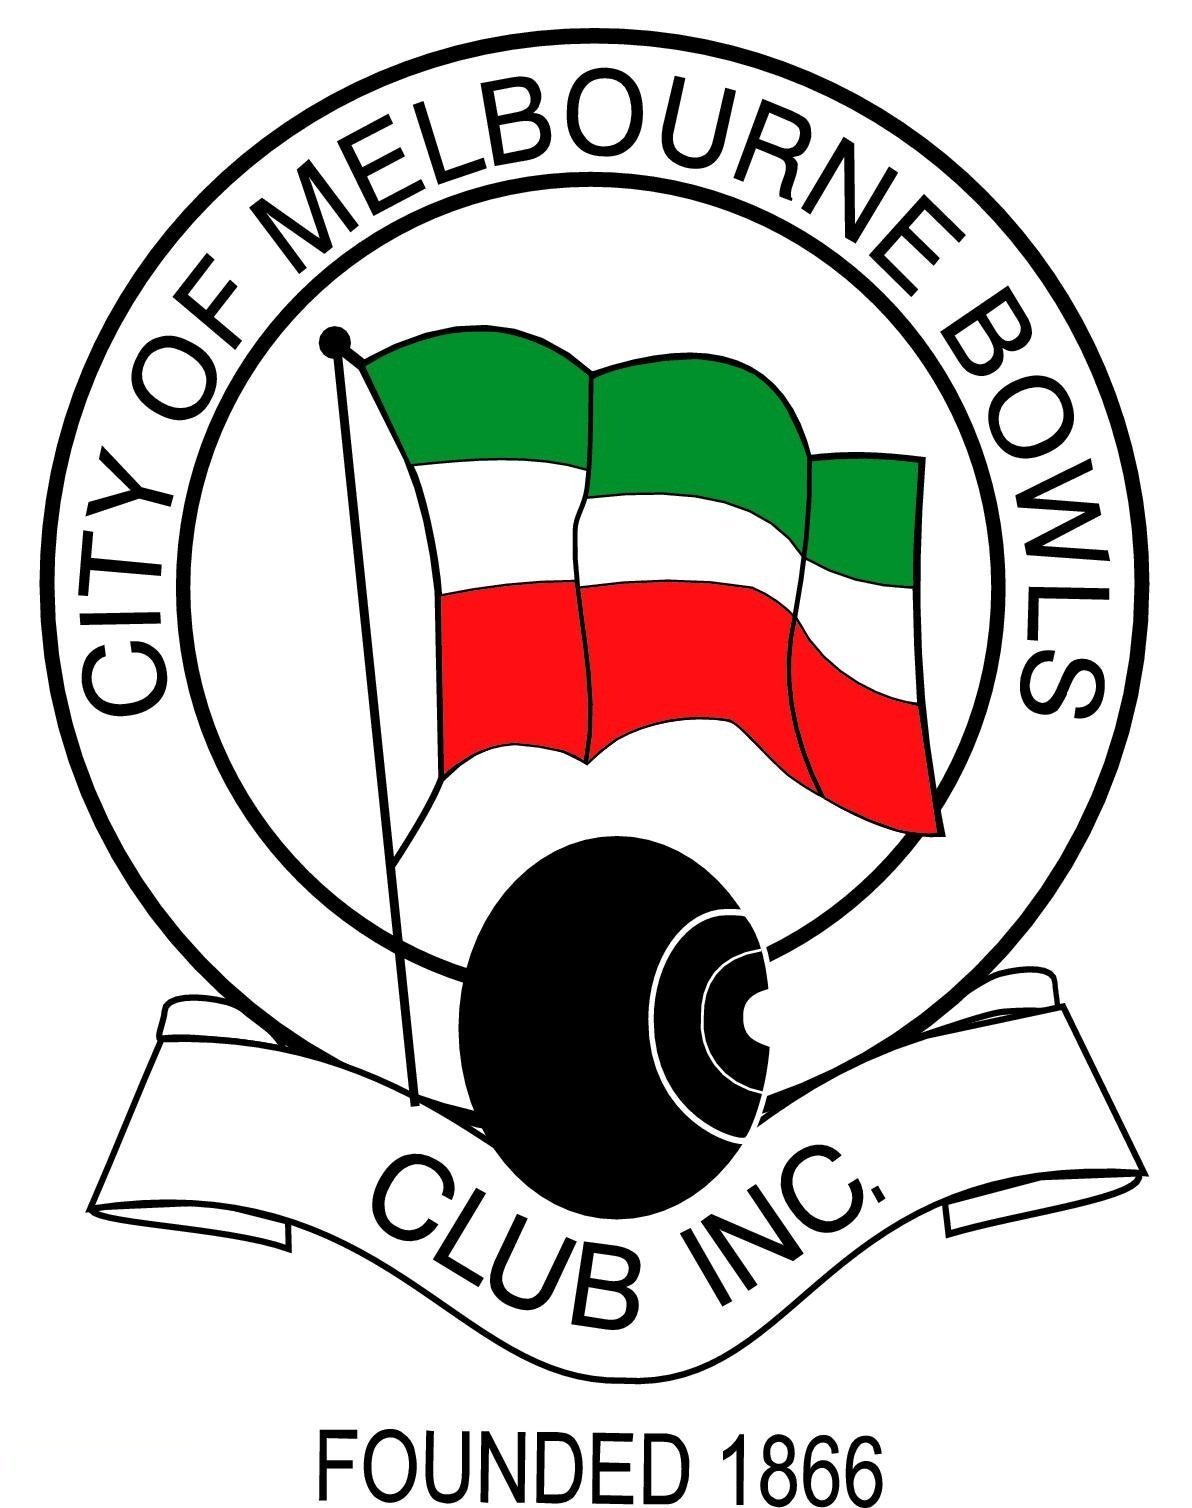 CITY OF MELBOURNE BOWLS CLUB